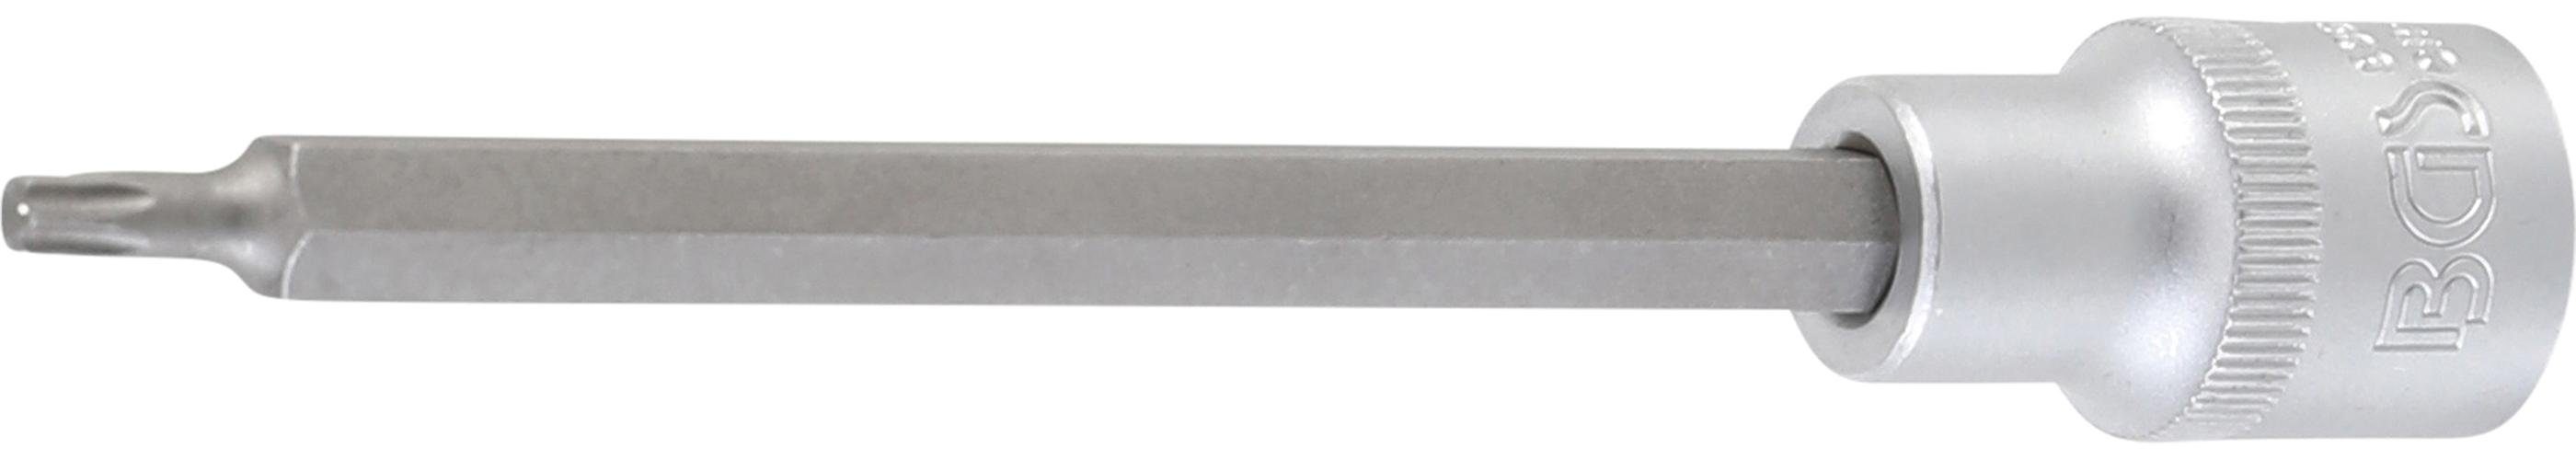 BGS technic Länge T25 Bit-Schraubendreher Bit-Einsatz, Antrieb T-Profil mm Innenvierkant (1/2), Torx) mm, 12,5 140 (für